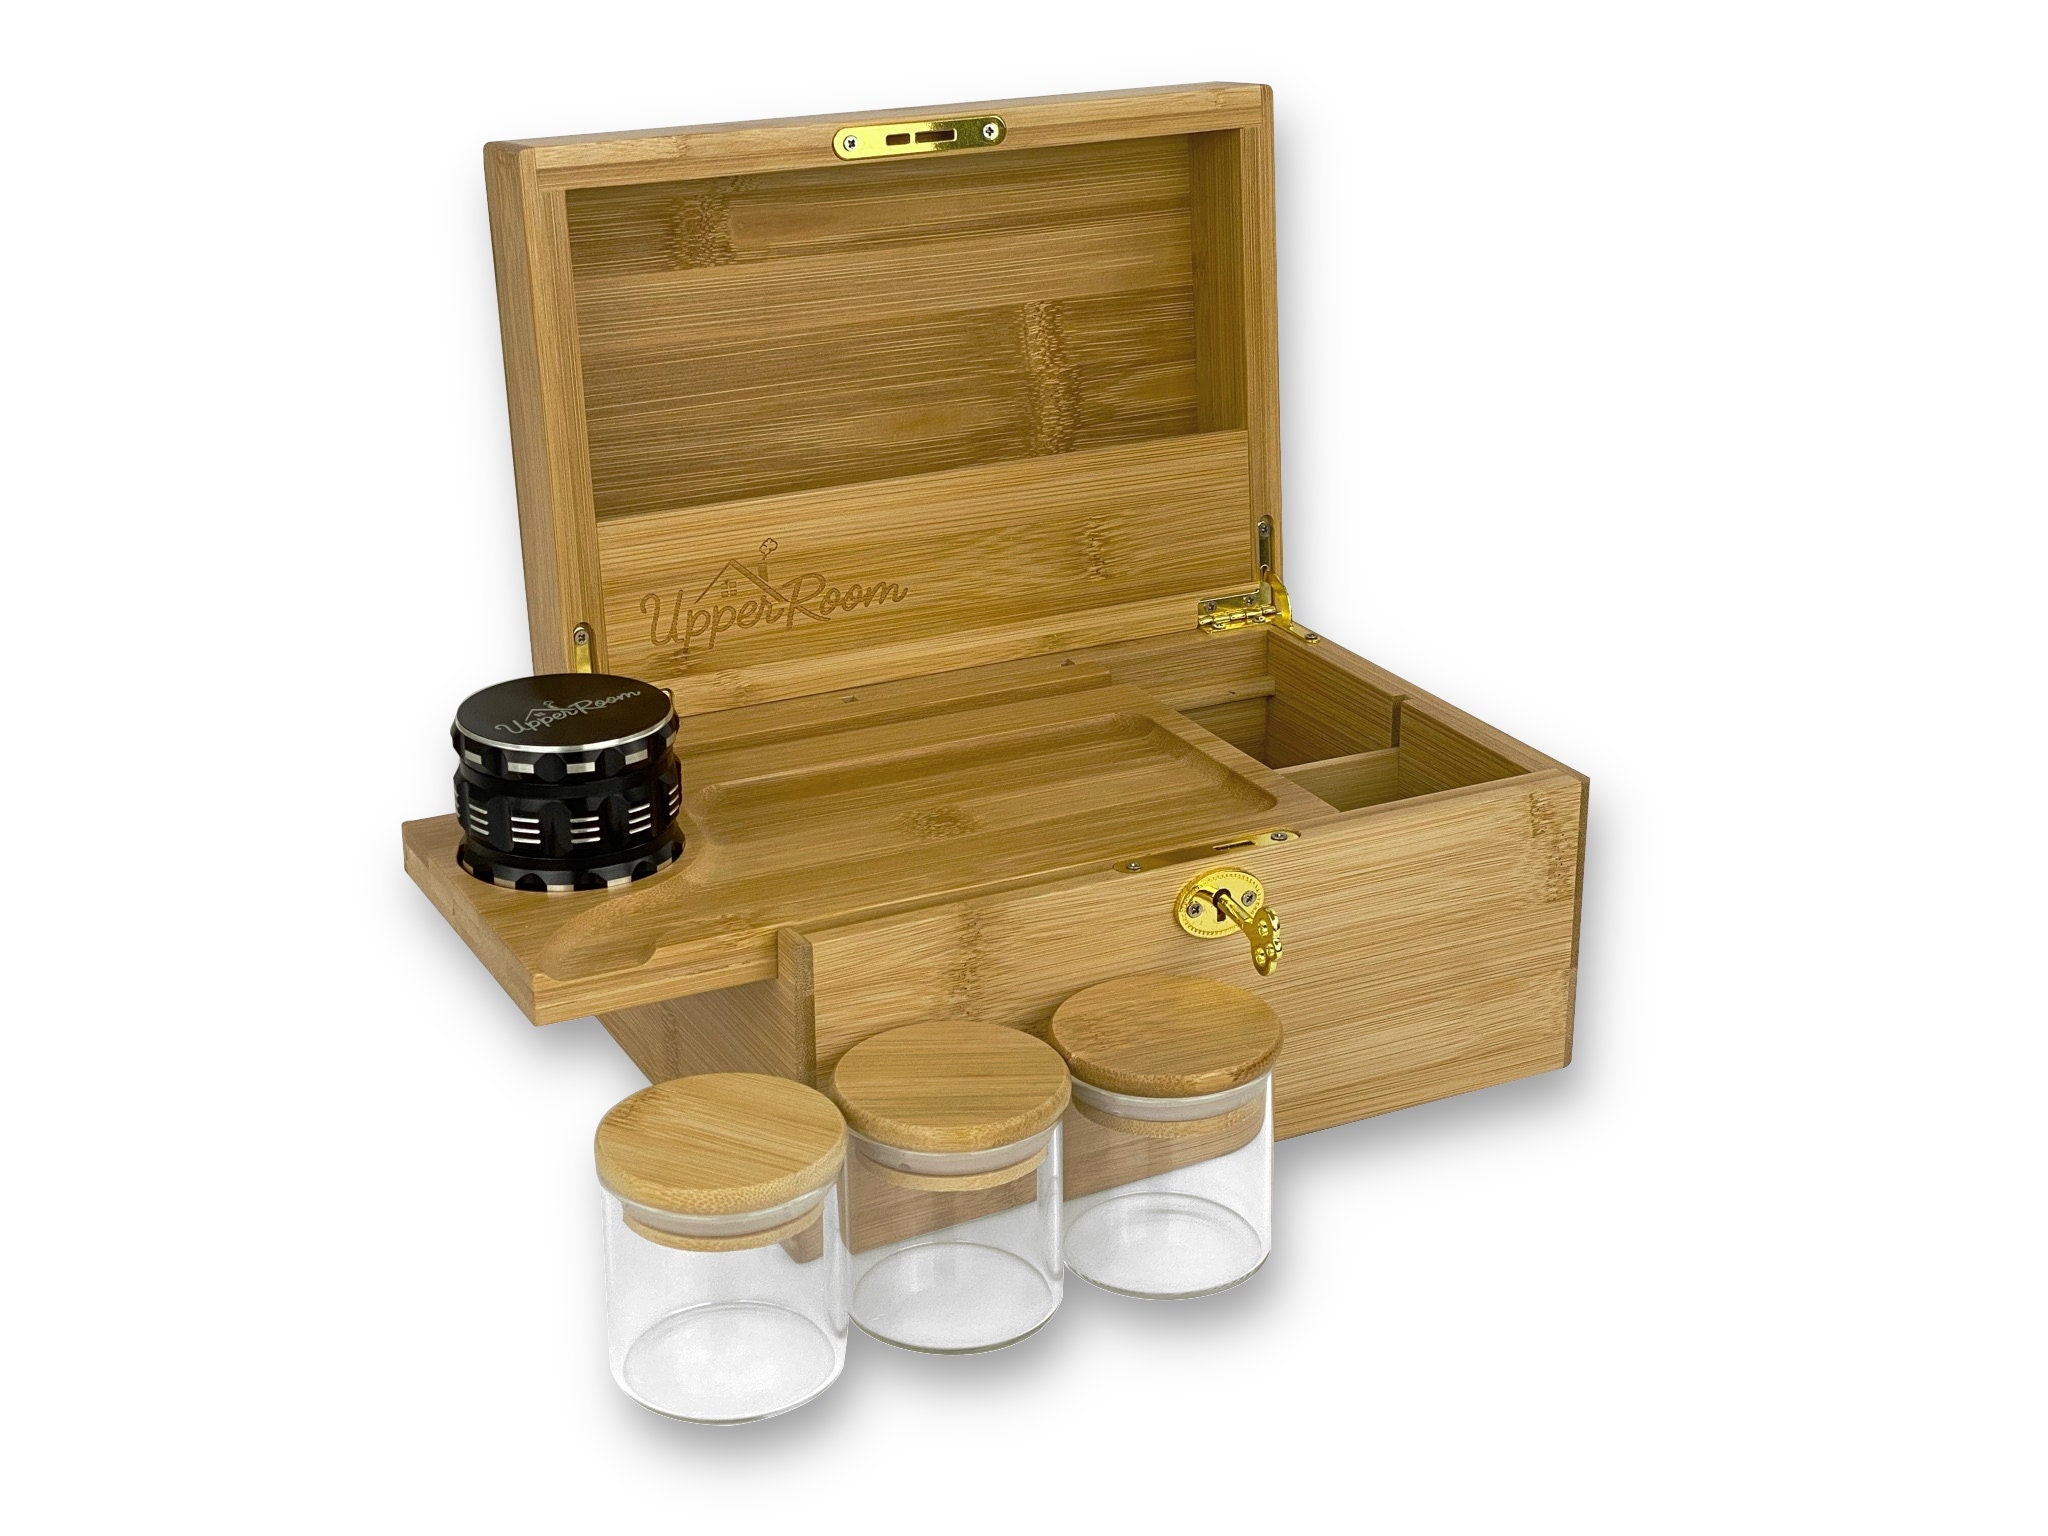 Stash Box with Accessories, Tray, 2 Airtight Jars, Bamboo Stash Box Combo  Kit, Premium Large Storage Box, Wooden Decorative Box Set, Removable